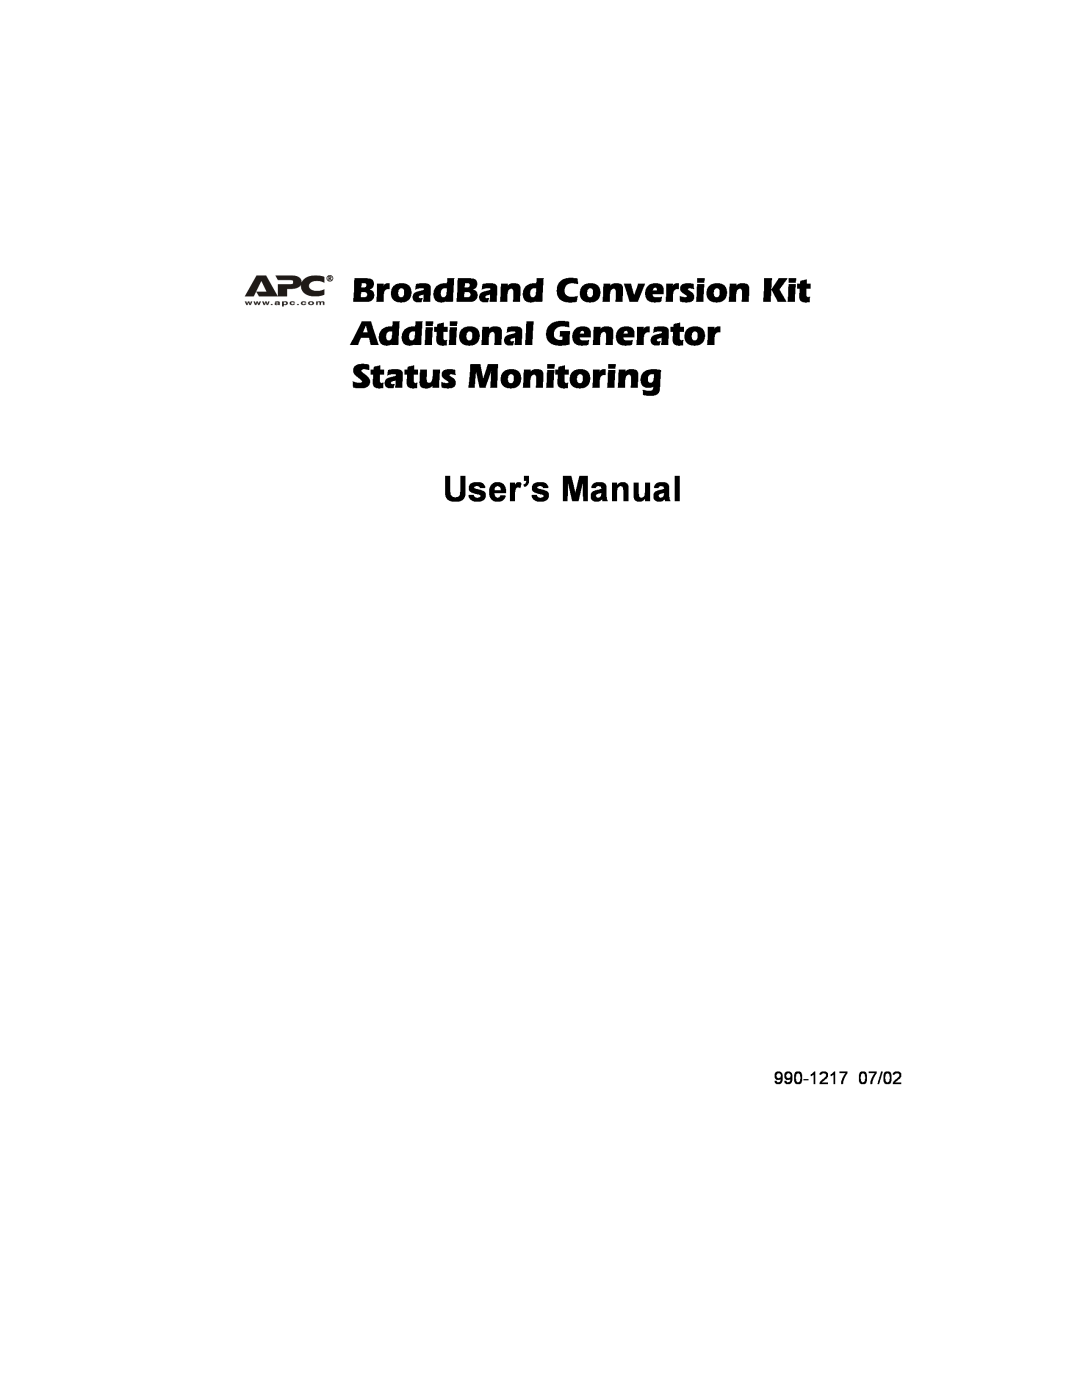 American Power Conversion user manual 990-121707/02, BroadBand Conversion Kit Additional Generator, Status Monitoring 